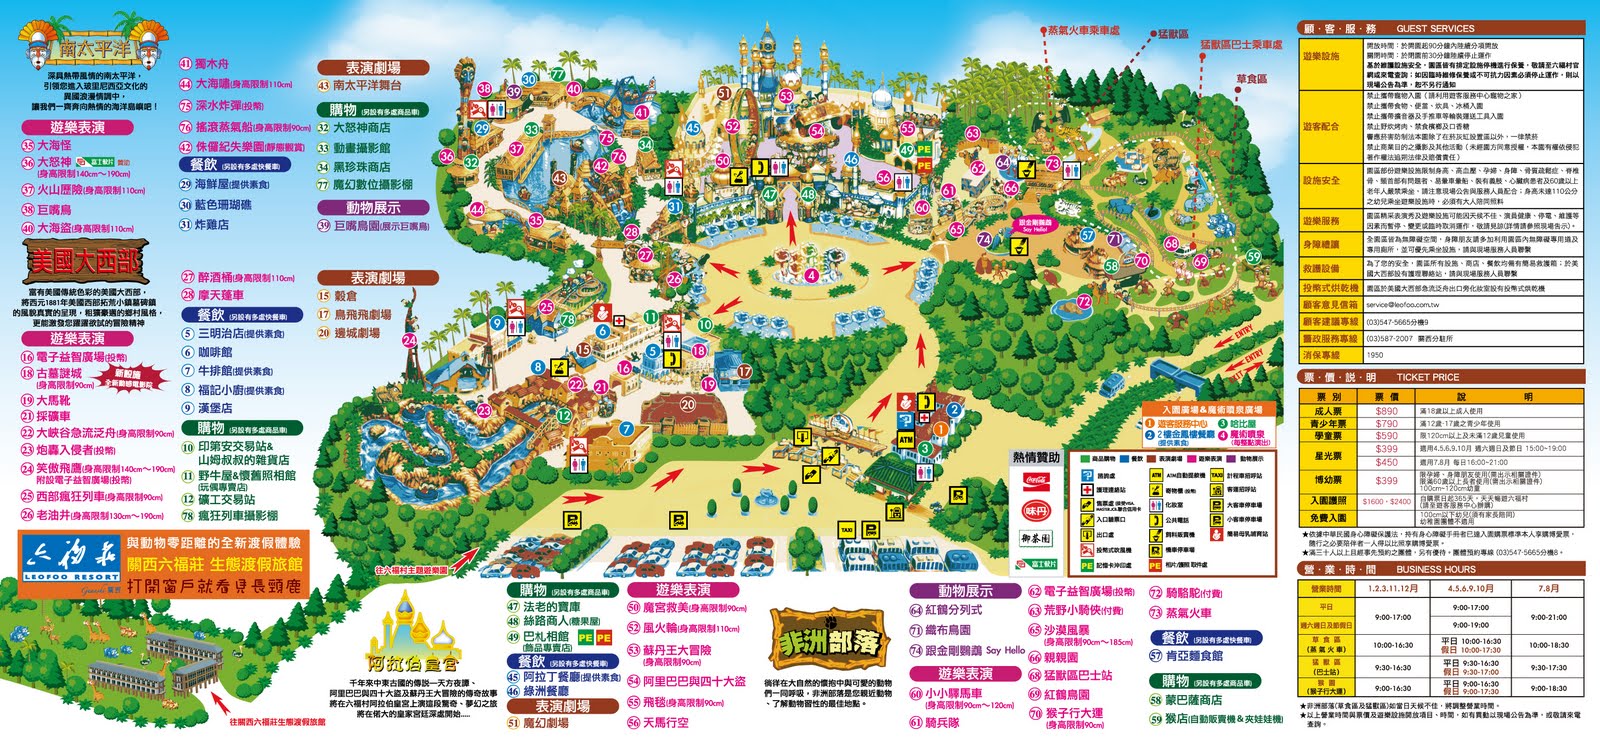 LeoFoo-Village-Theme-Park-Map